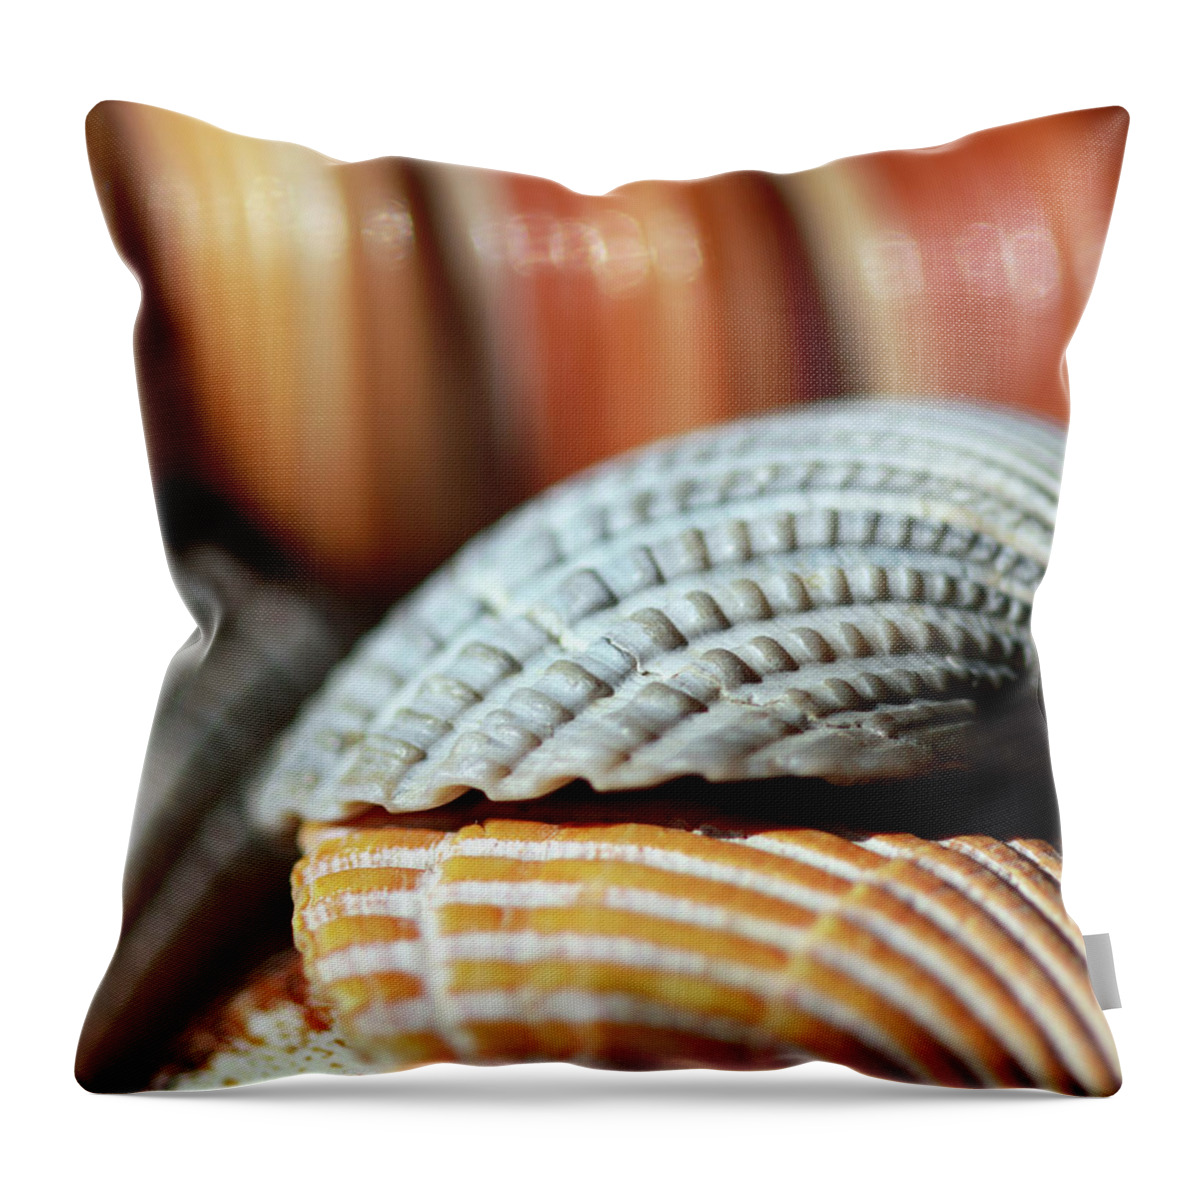 Seashells Throw Pillow featuring the photograph Blue and Orange Seashells by Angela Murdock